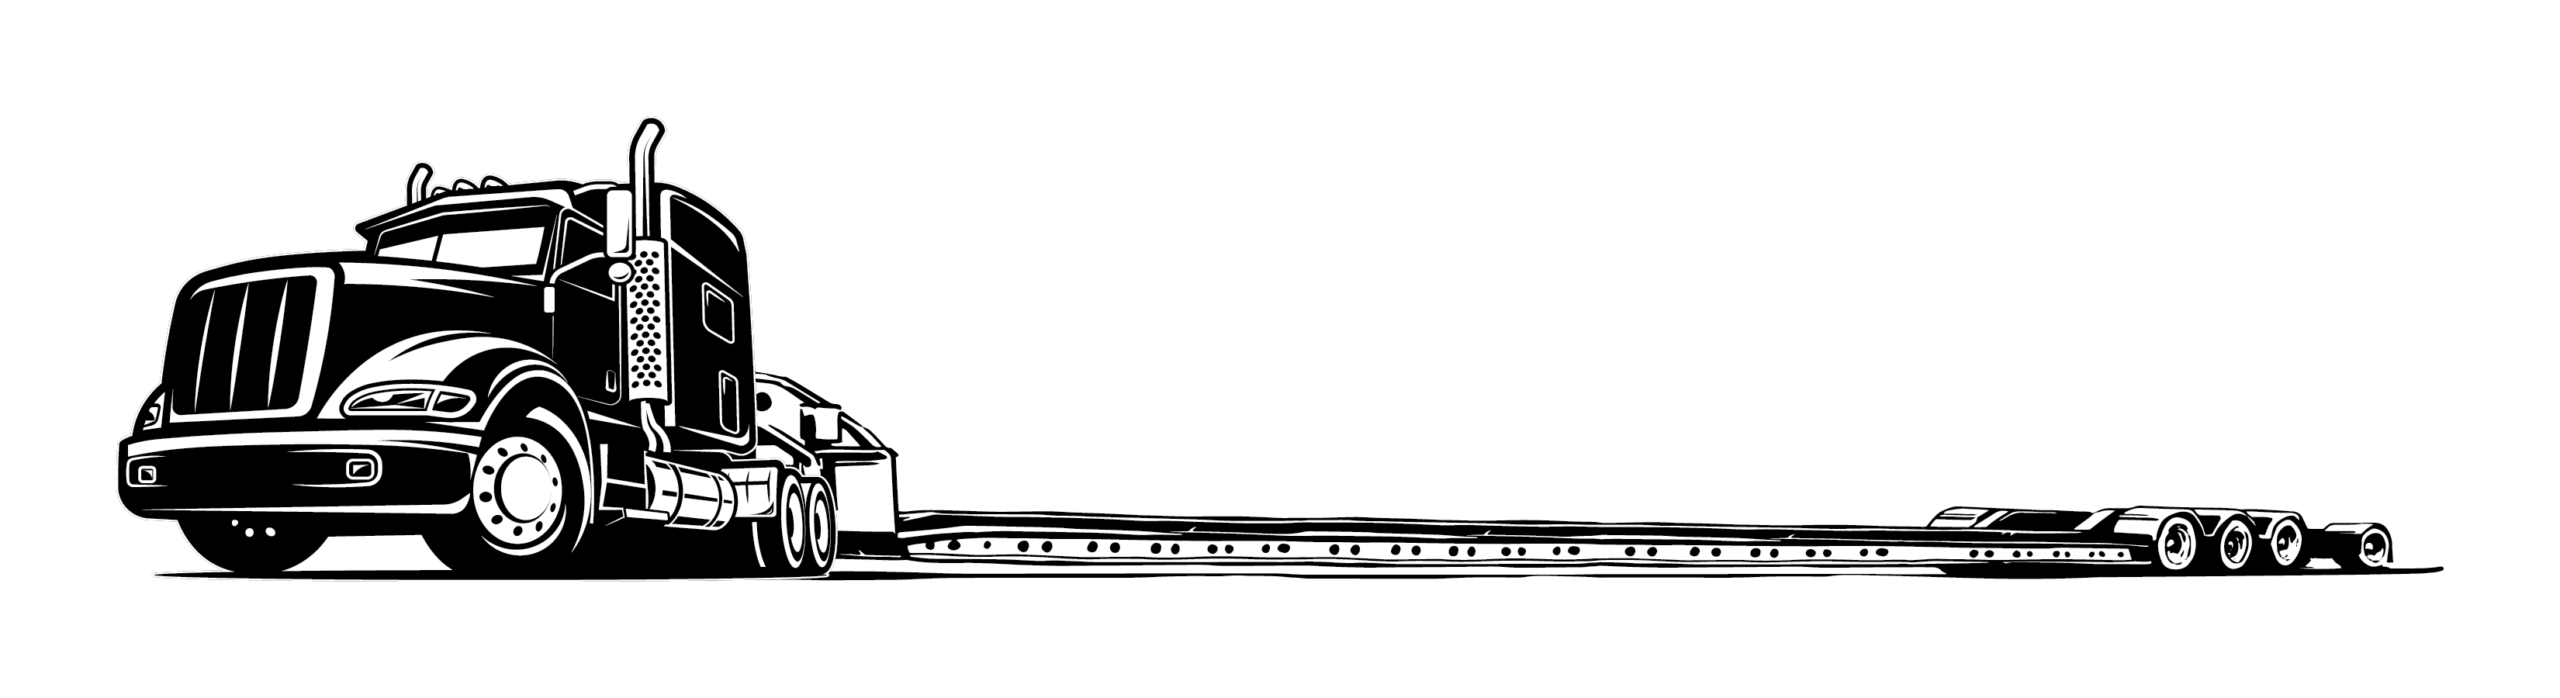 C&S Transportation - FINAL